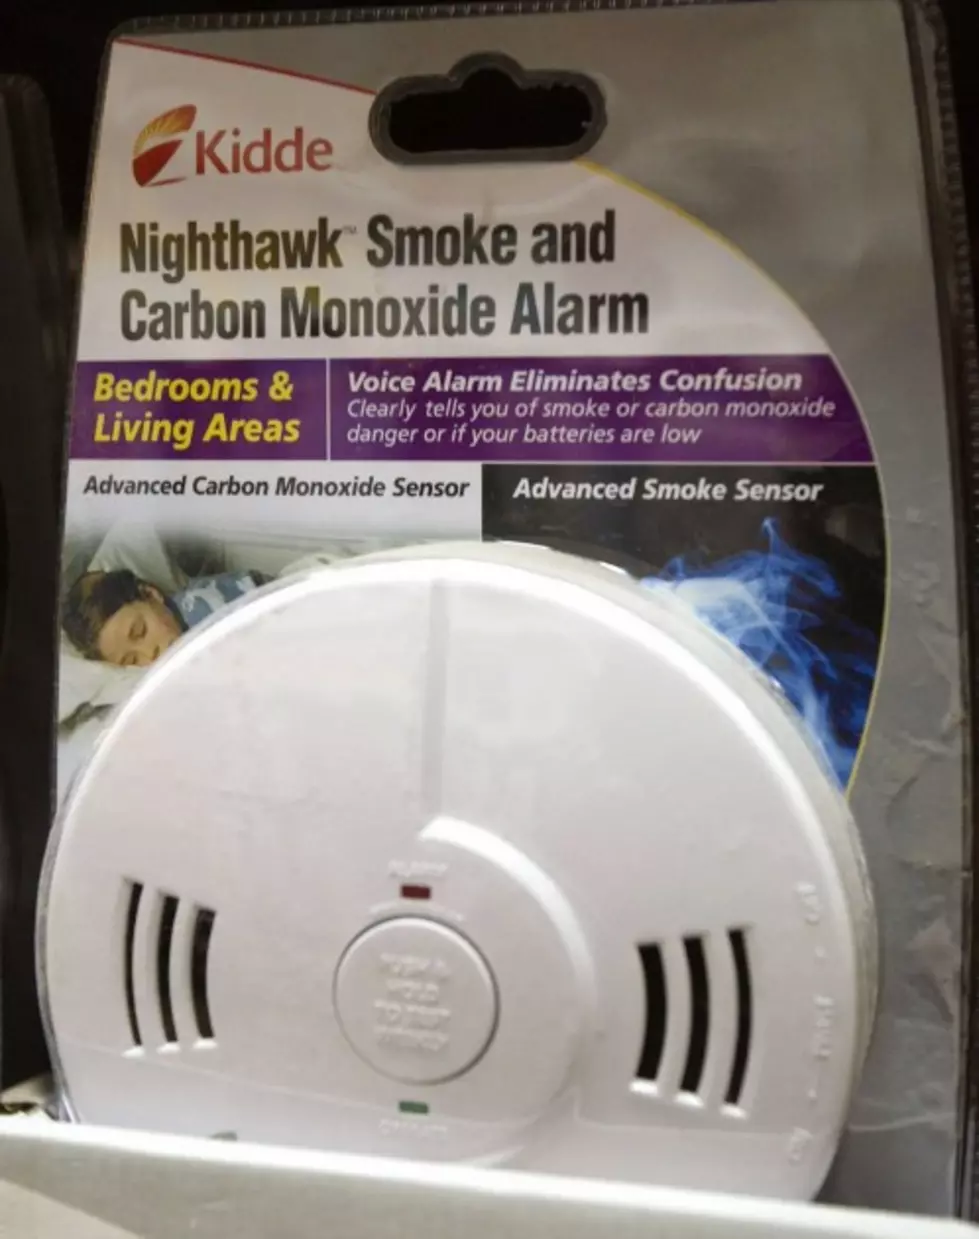 Carbon Monoxide Warning Issued